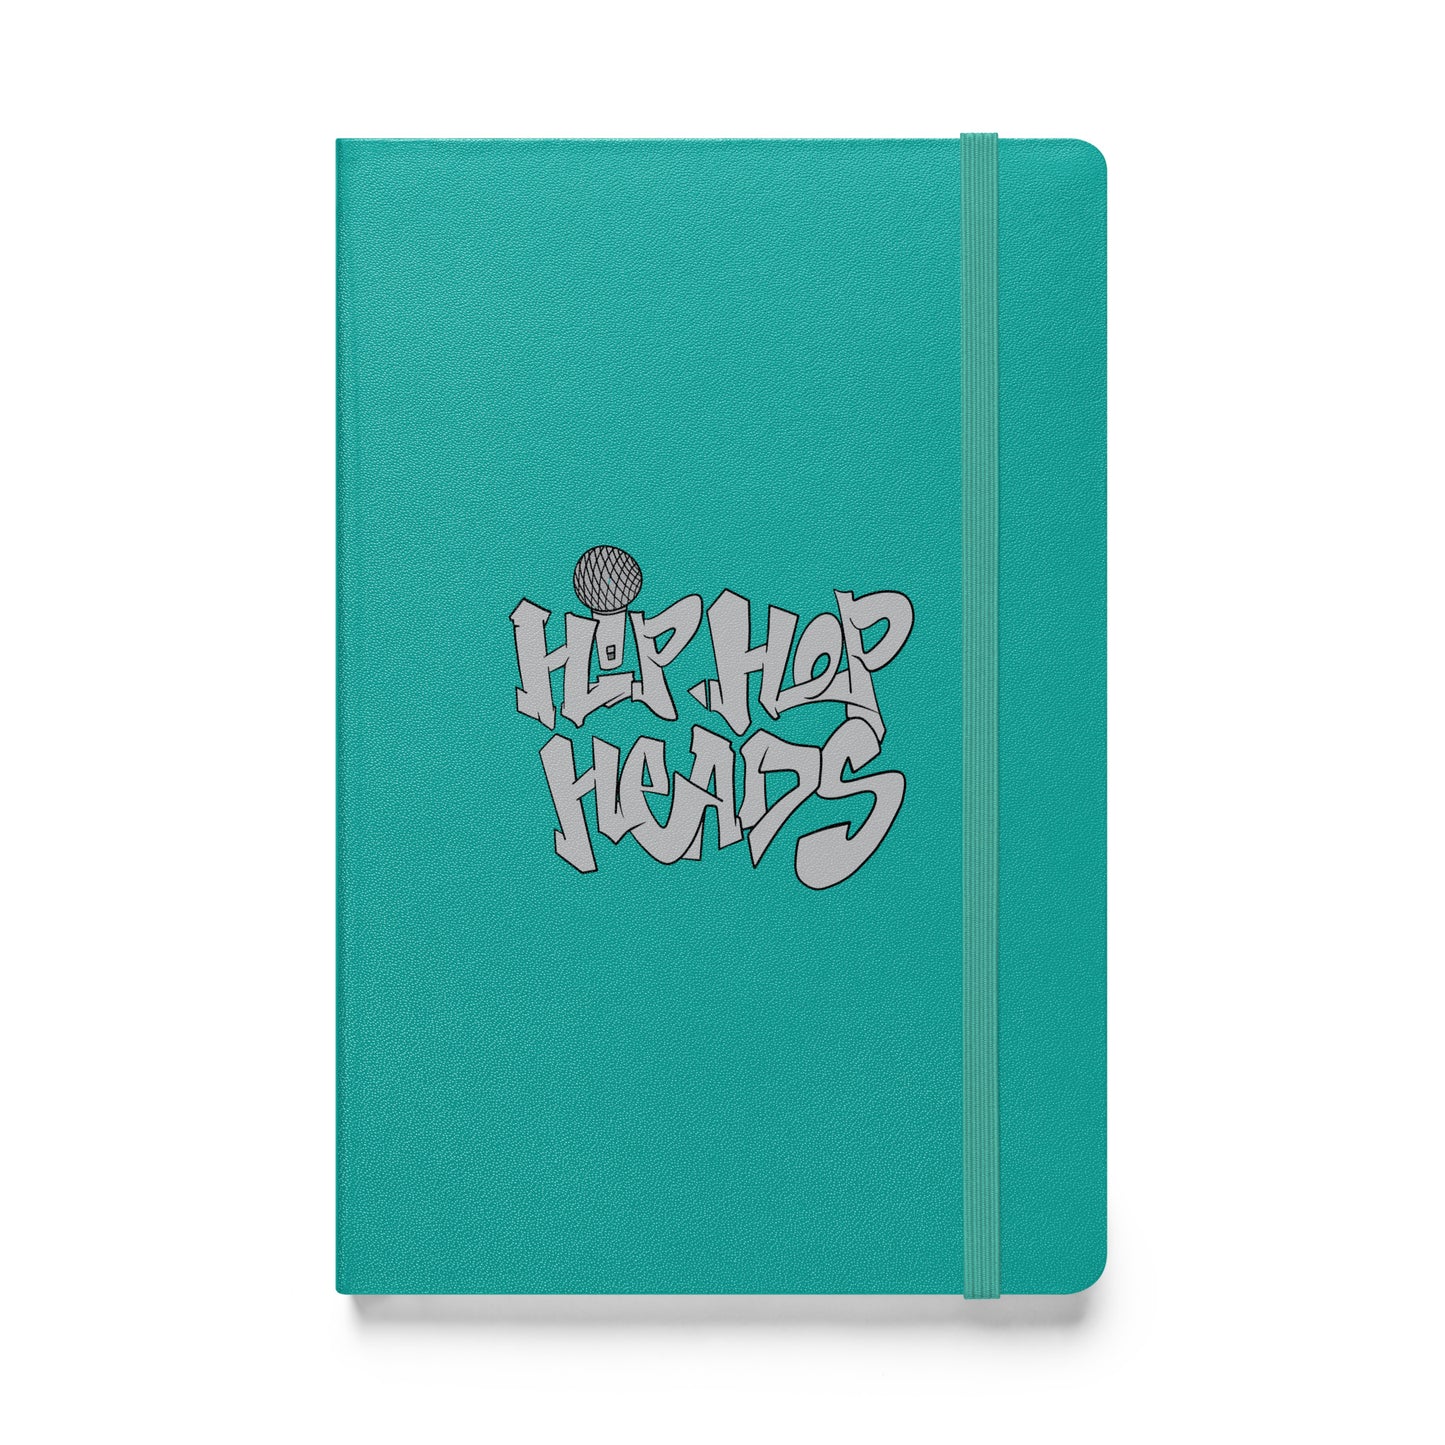 Hip Hop Heads Rhyme Writer Notebook